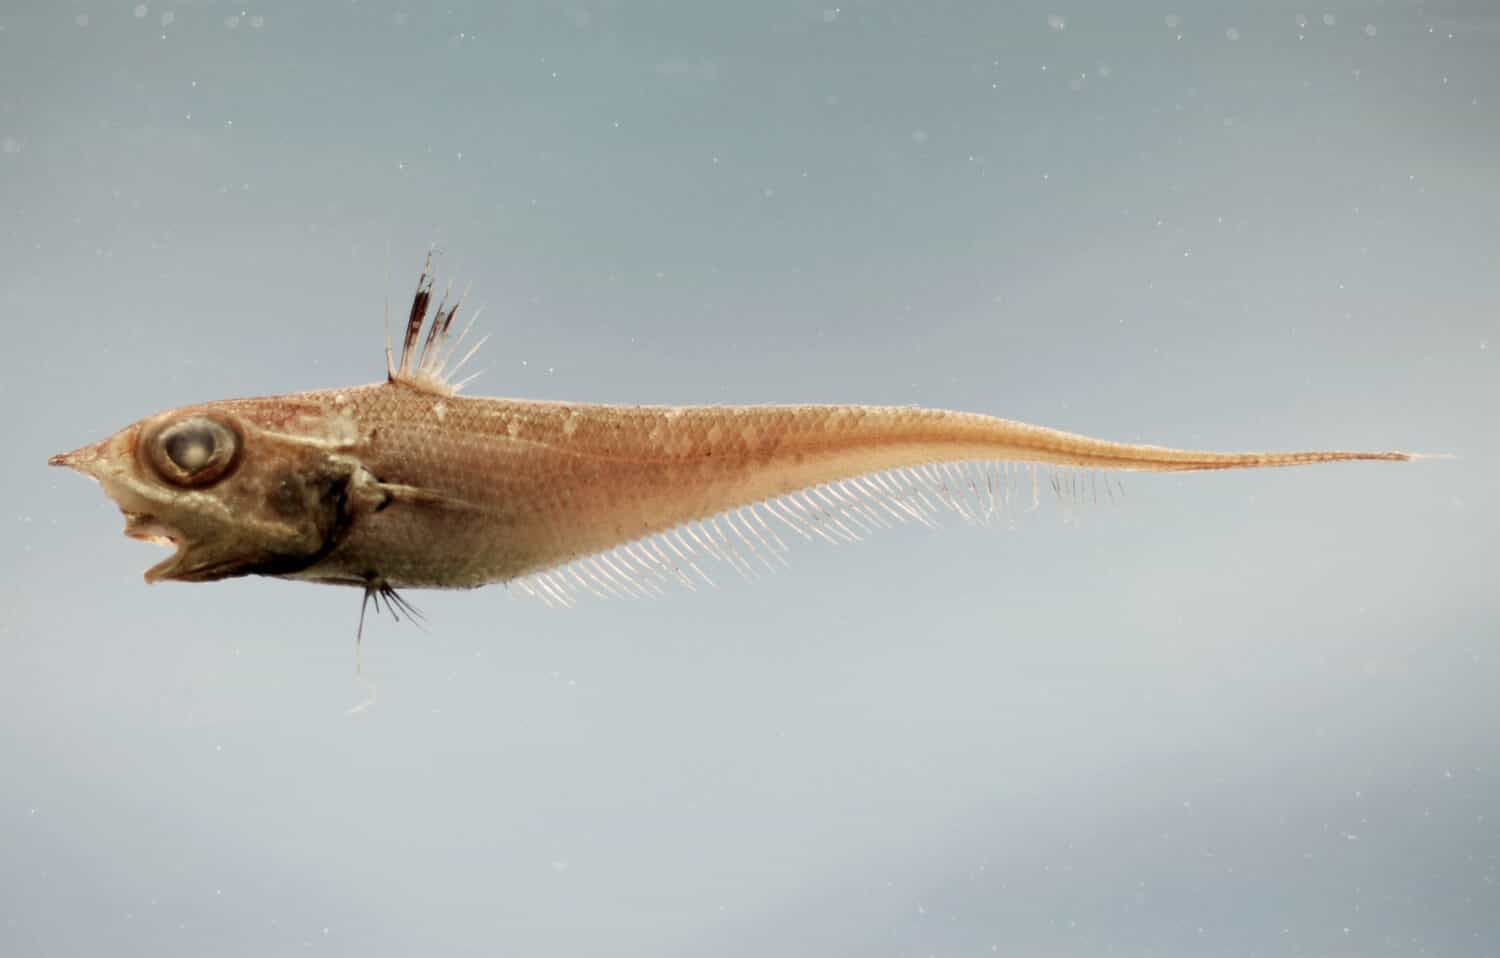 Hollowsnout grenadier or saddled grenadier ( Caelorinchus caelorhincus ). Gulf of Mexico, Fish specimen on a monochrome background